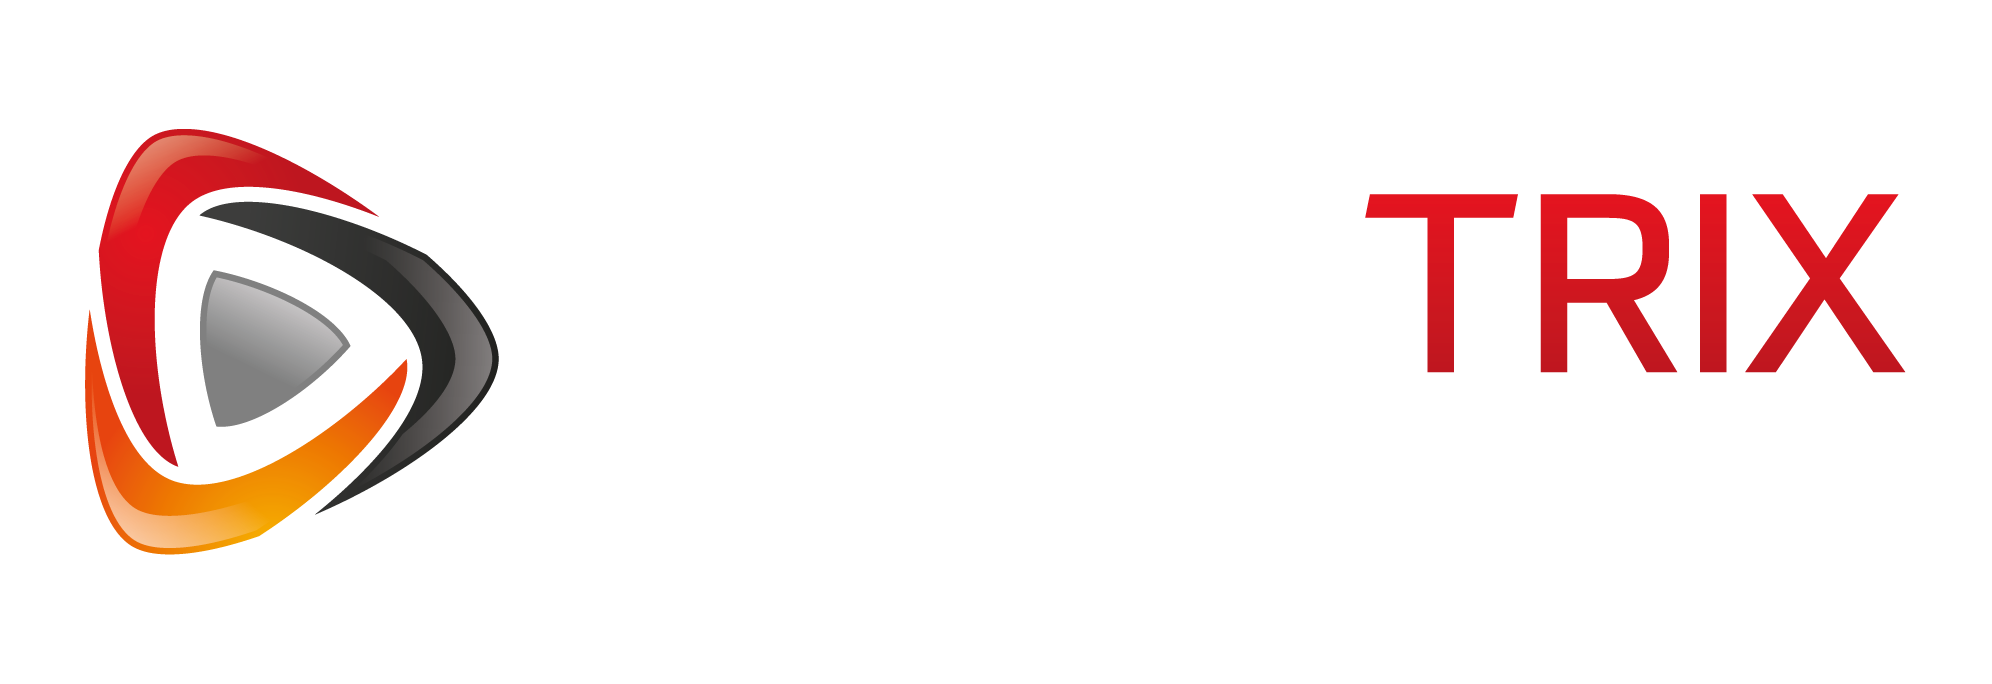 Mediatrix Logo